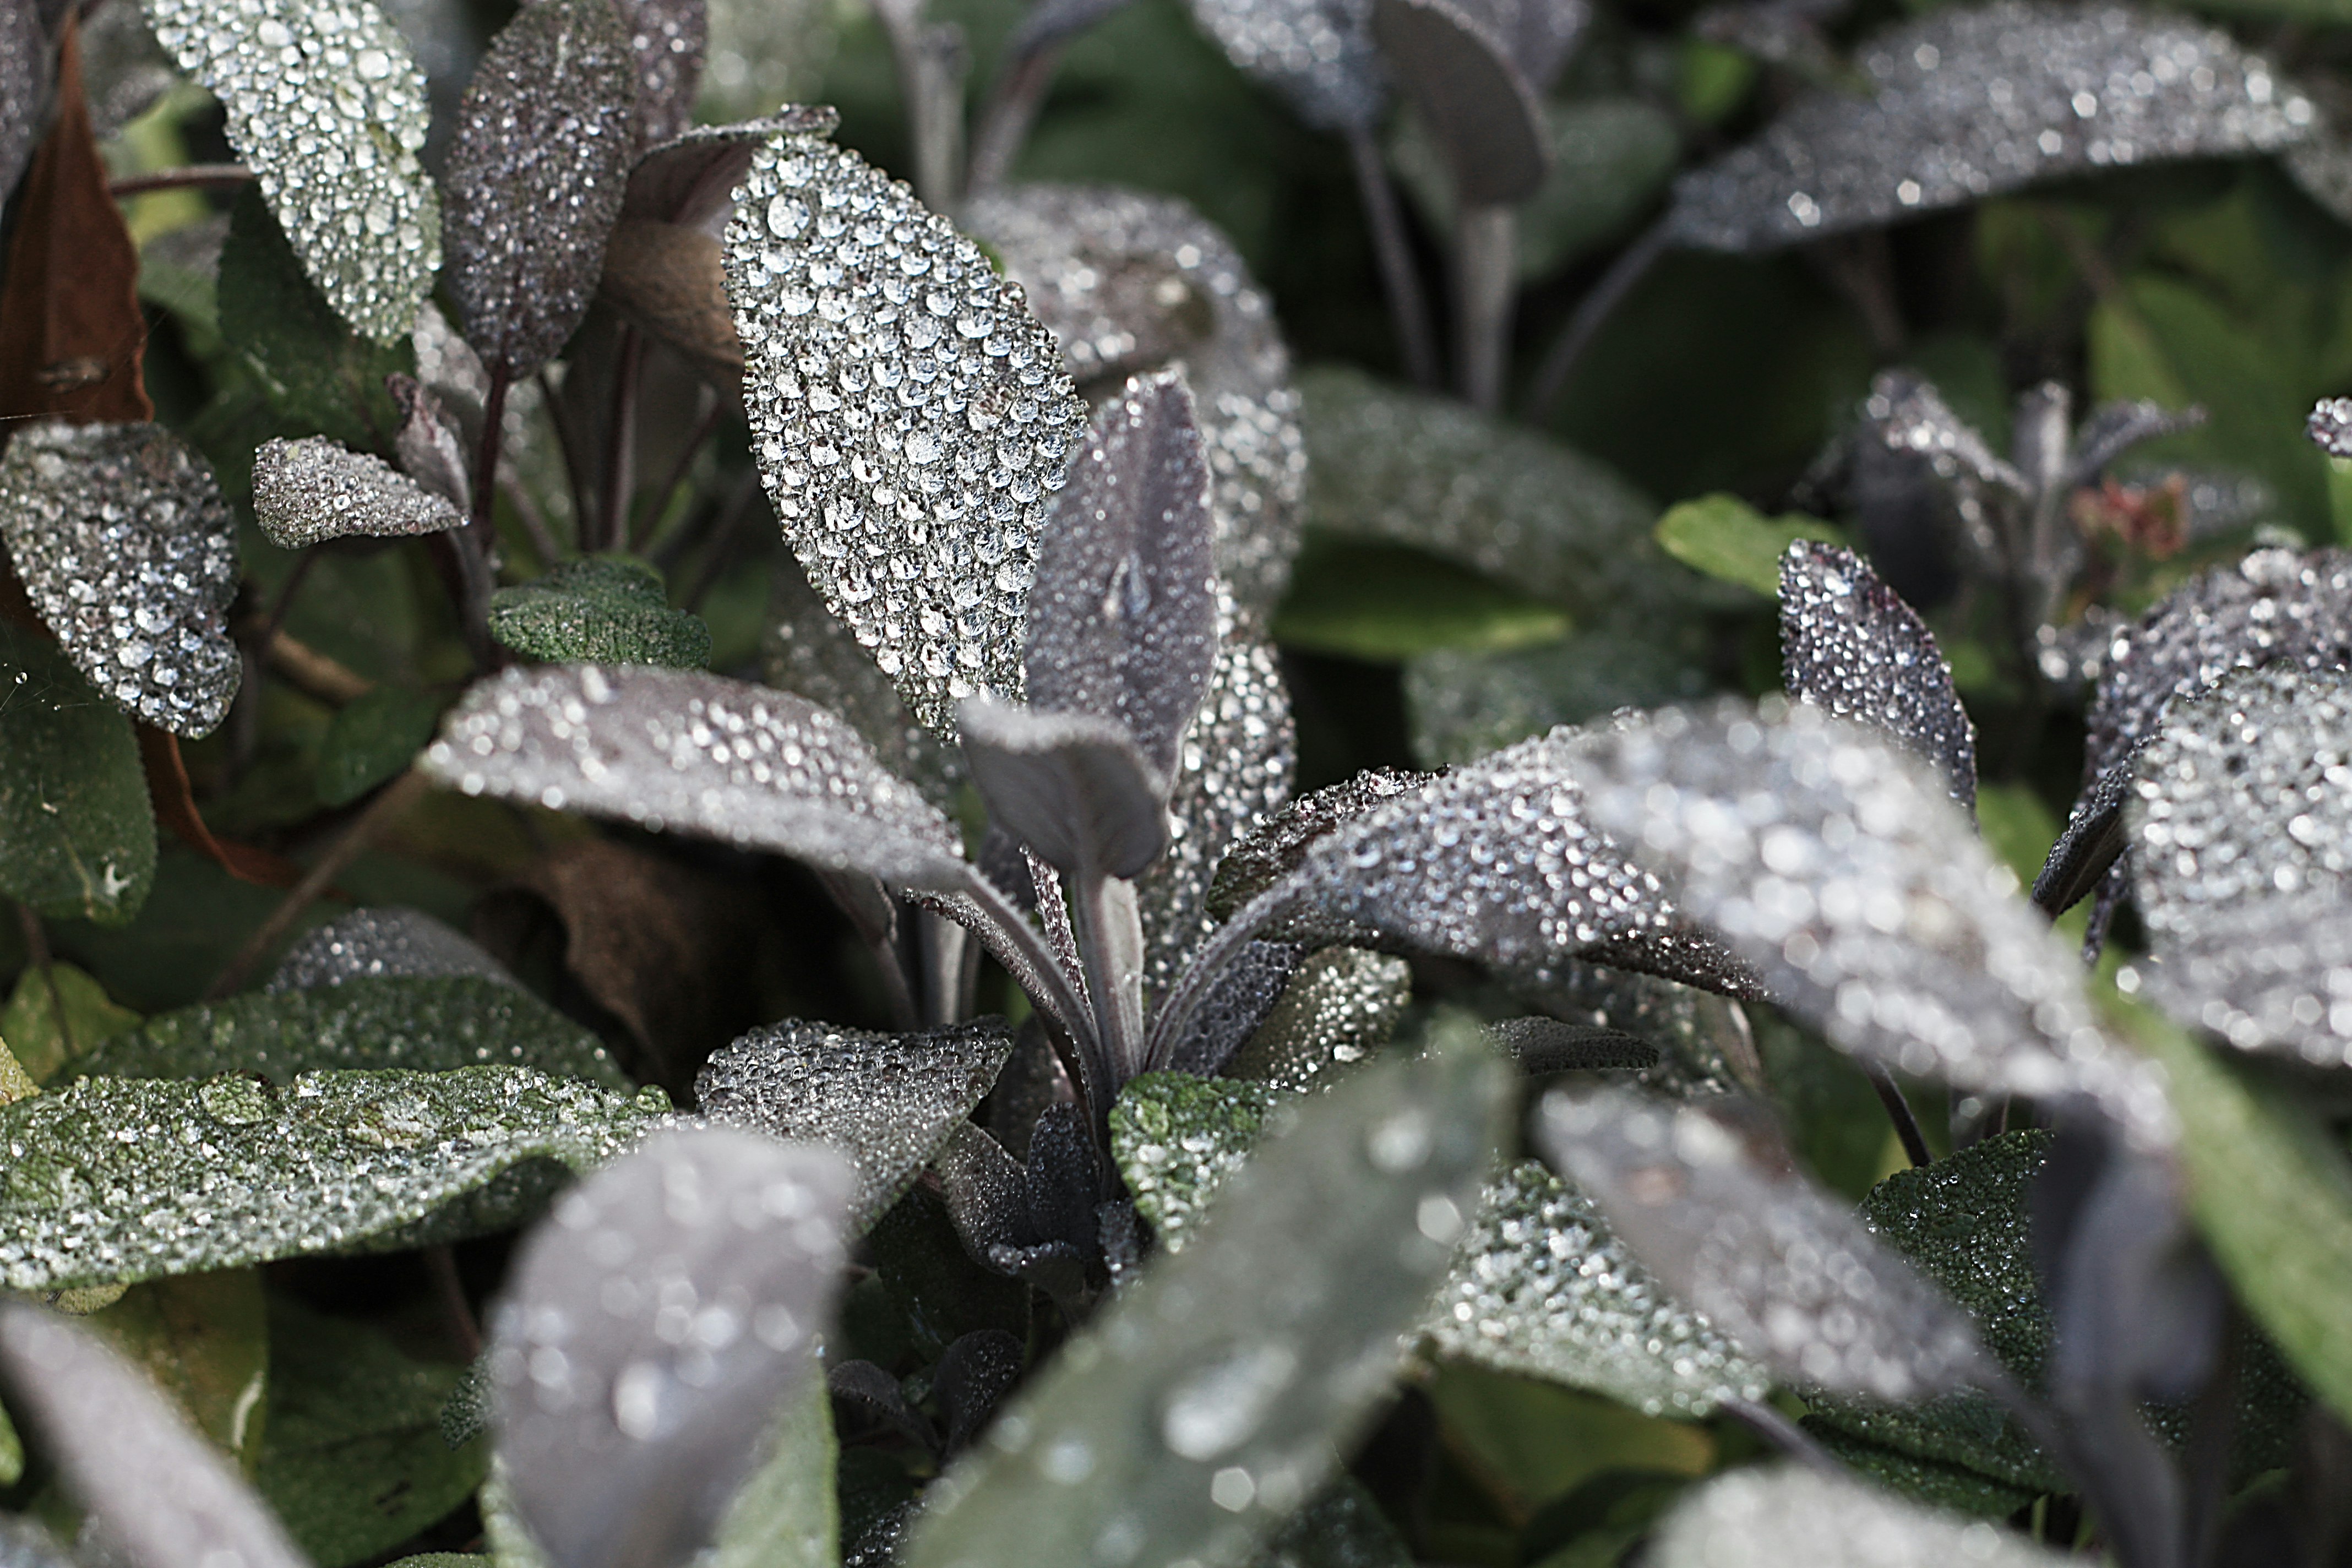 macro photography of dew drops on plants